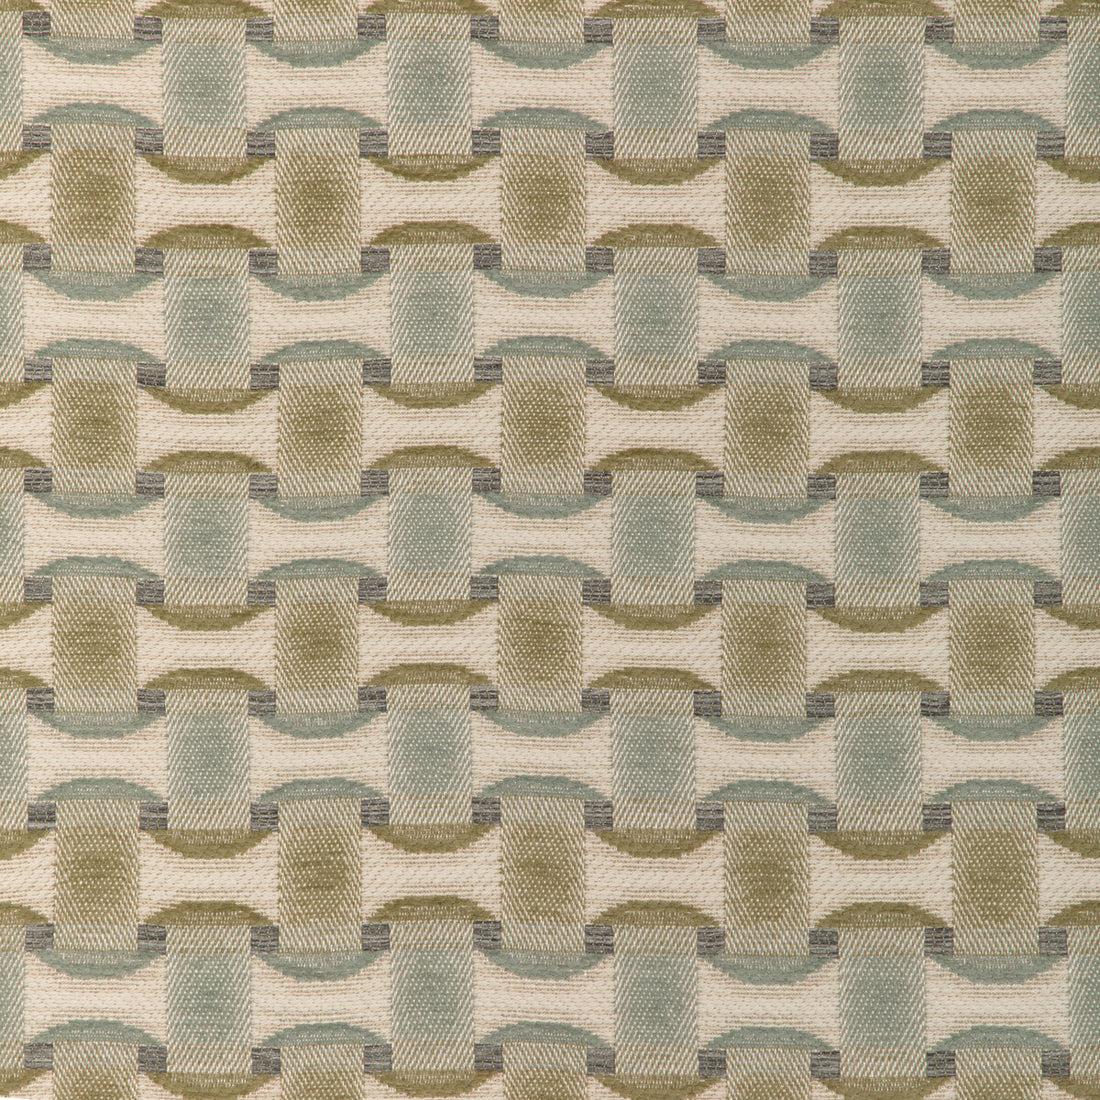 Kravet Design fabric in 37147-330 color - pattern 37147.330.0 - by Kravet Design in the Color Weaves collection